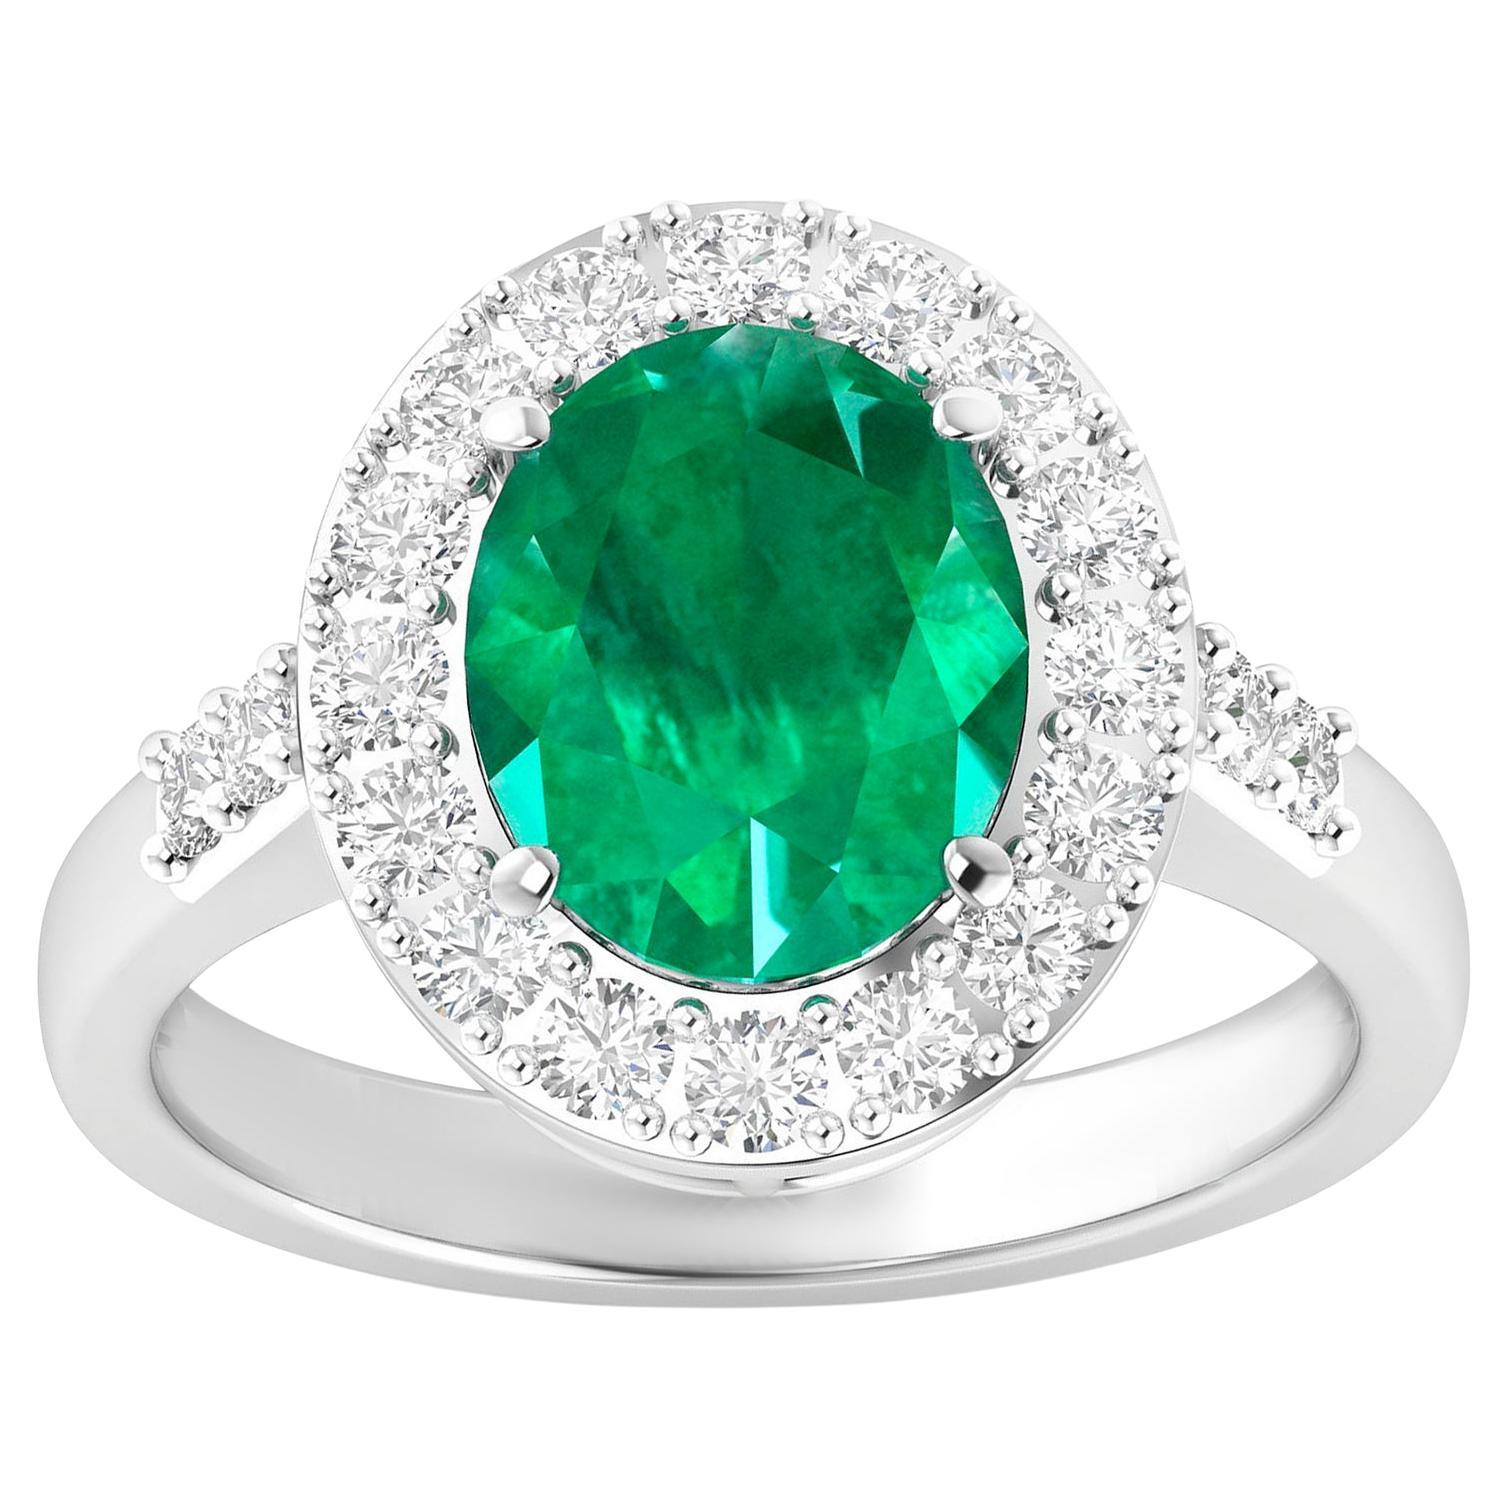 Natural Zambian Emerald Ring Diamond Setting 3.05 Carats 14K White Gold For Sale